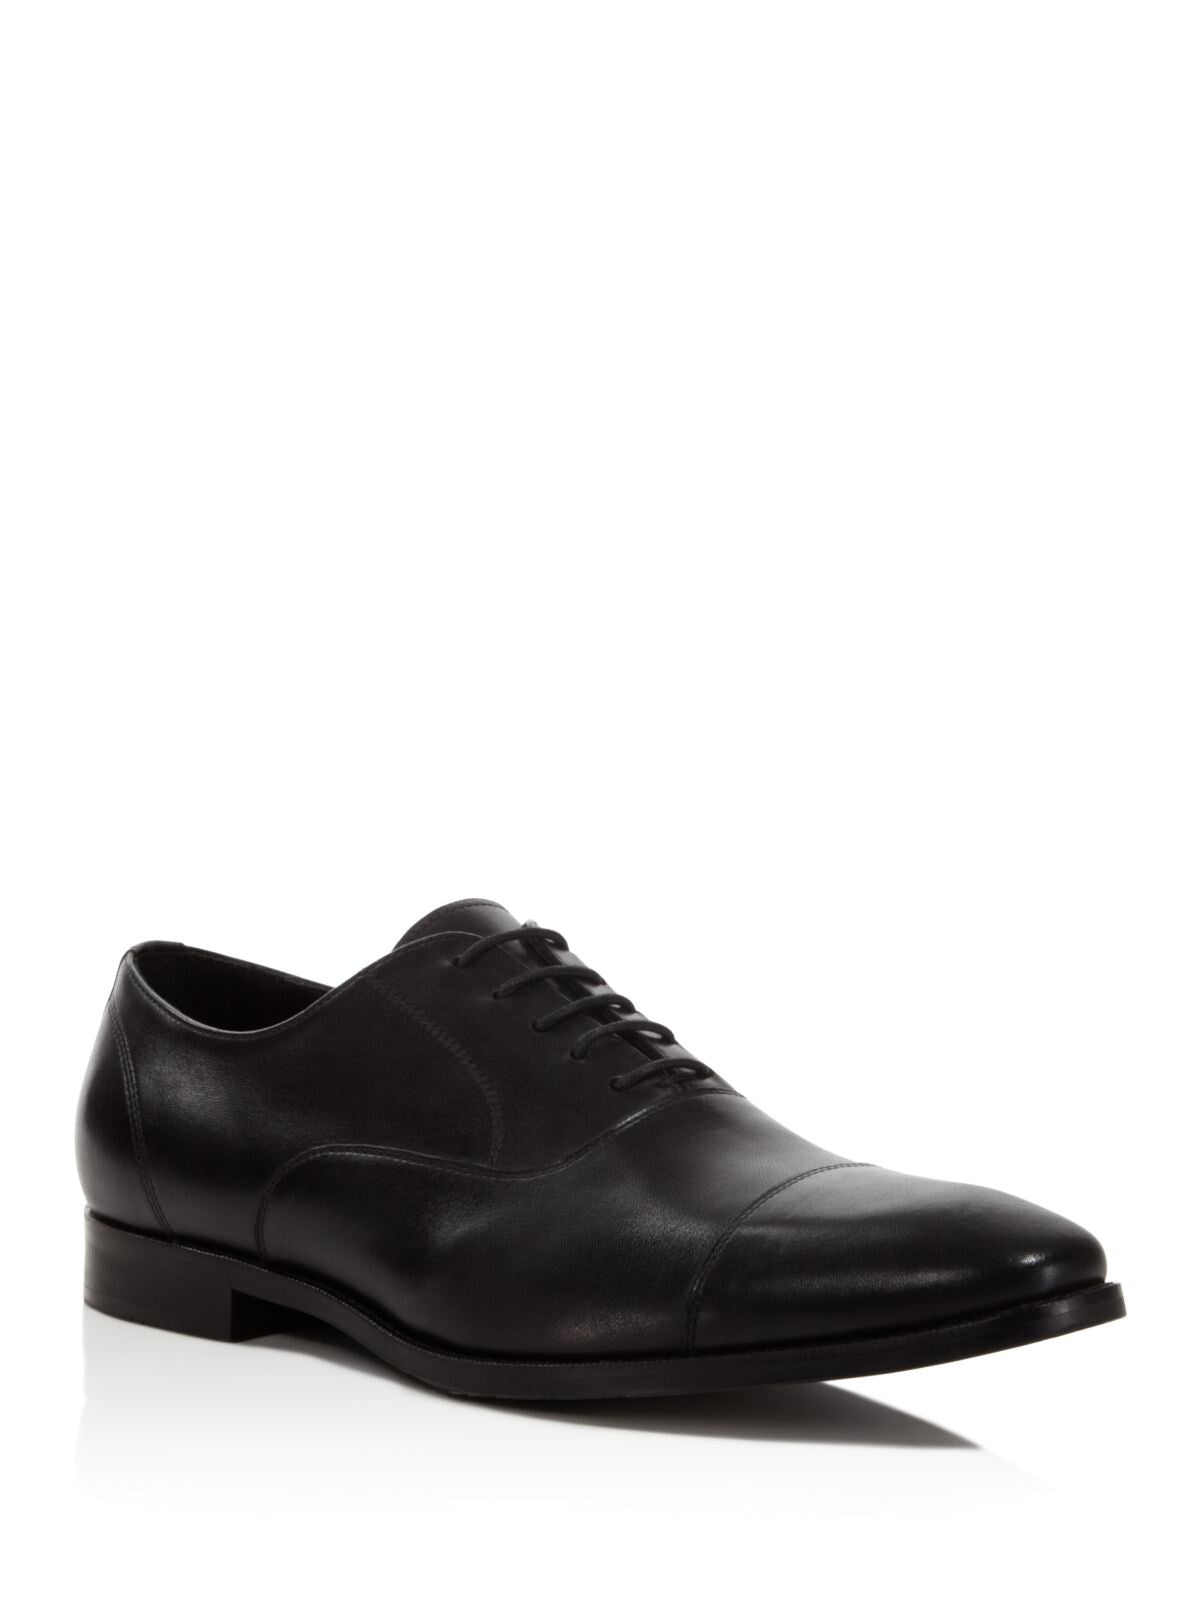 GORDON RUSH Mens Black Comfort Dillon Round Toe Block Heel Lace-Up Leather Oxford Shoes 8